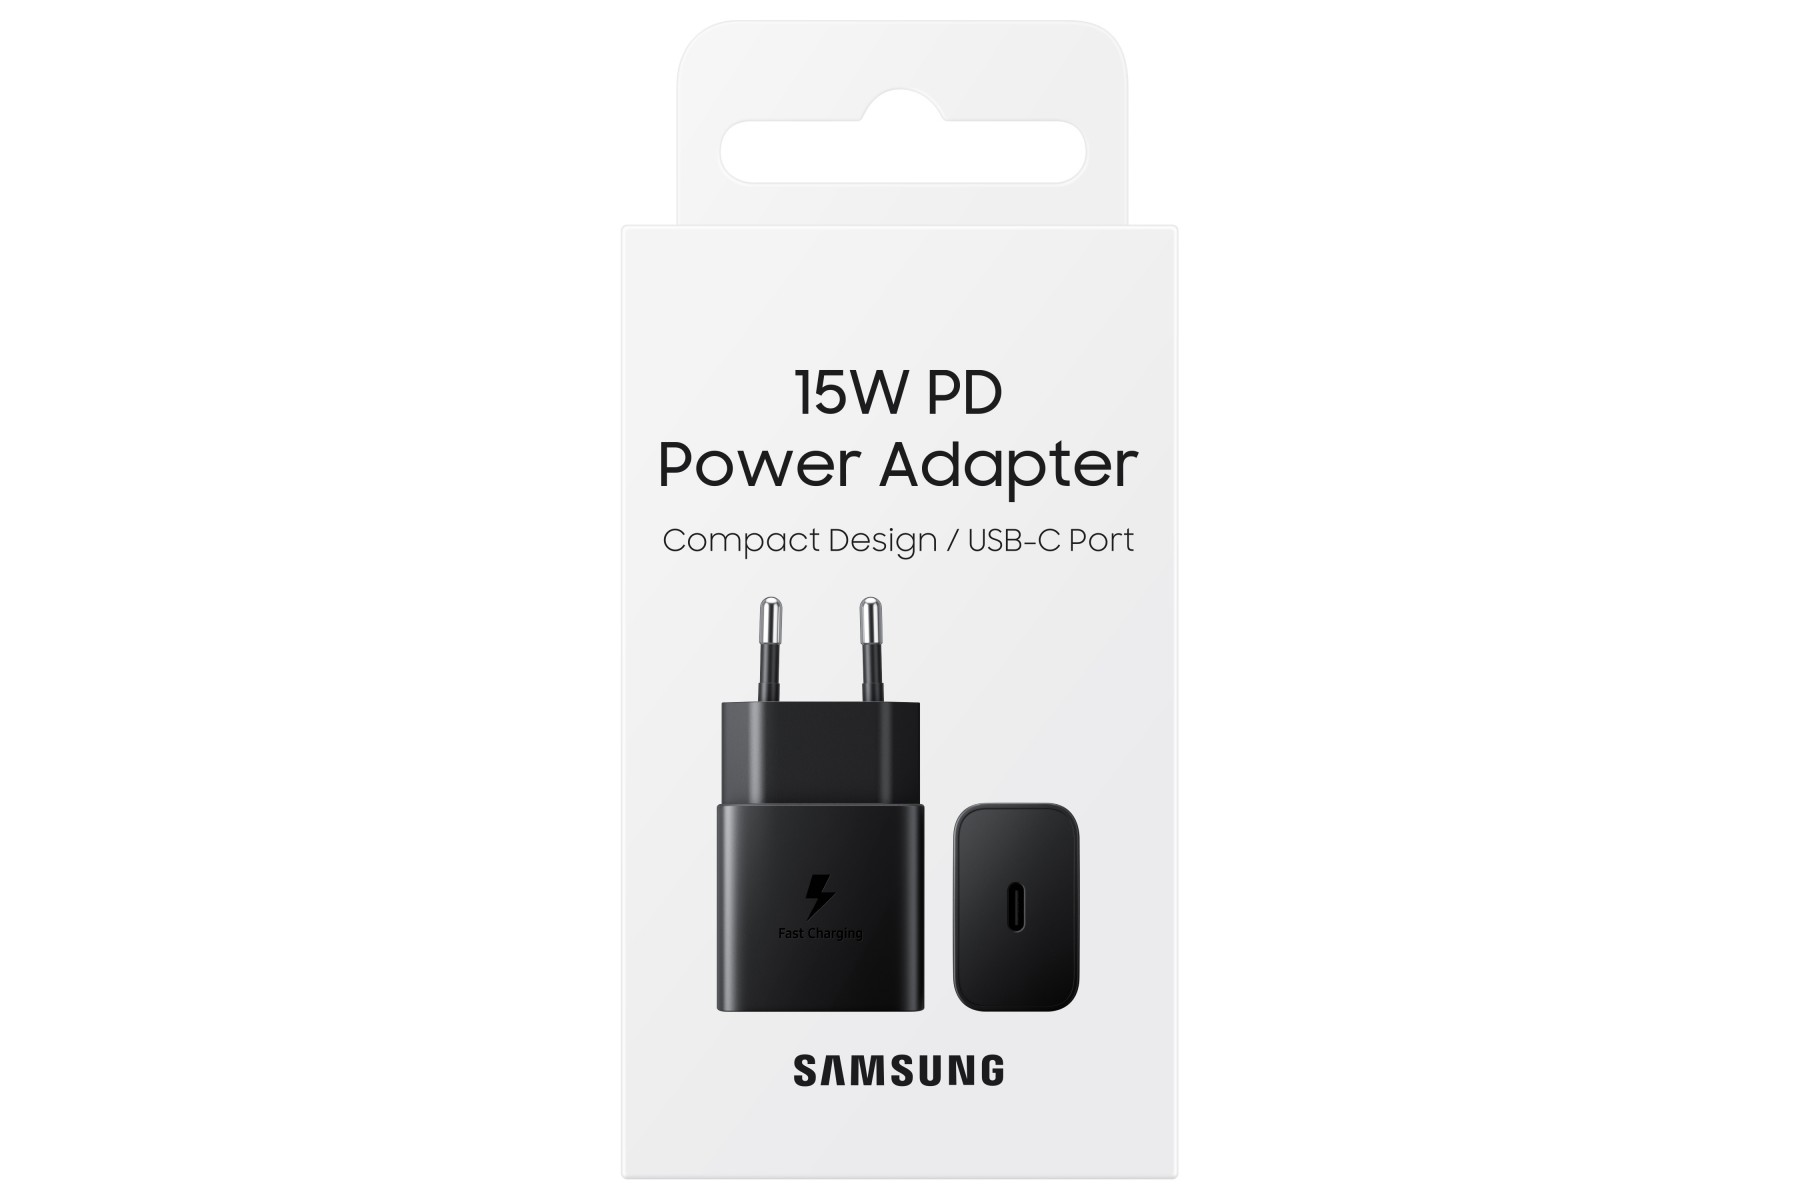 Samsung Power Adapter 15W